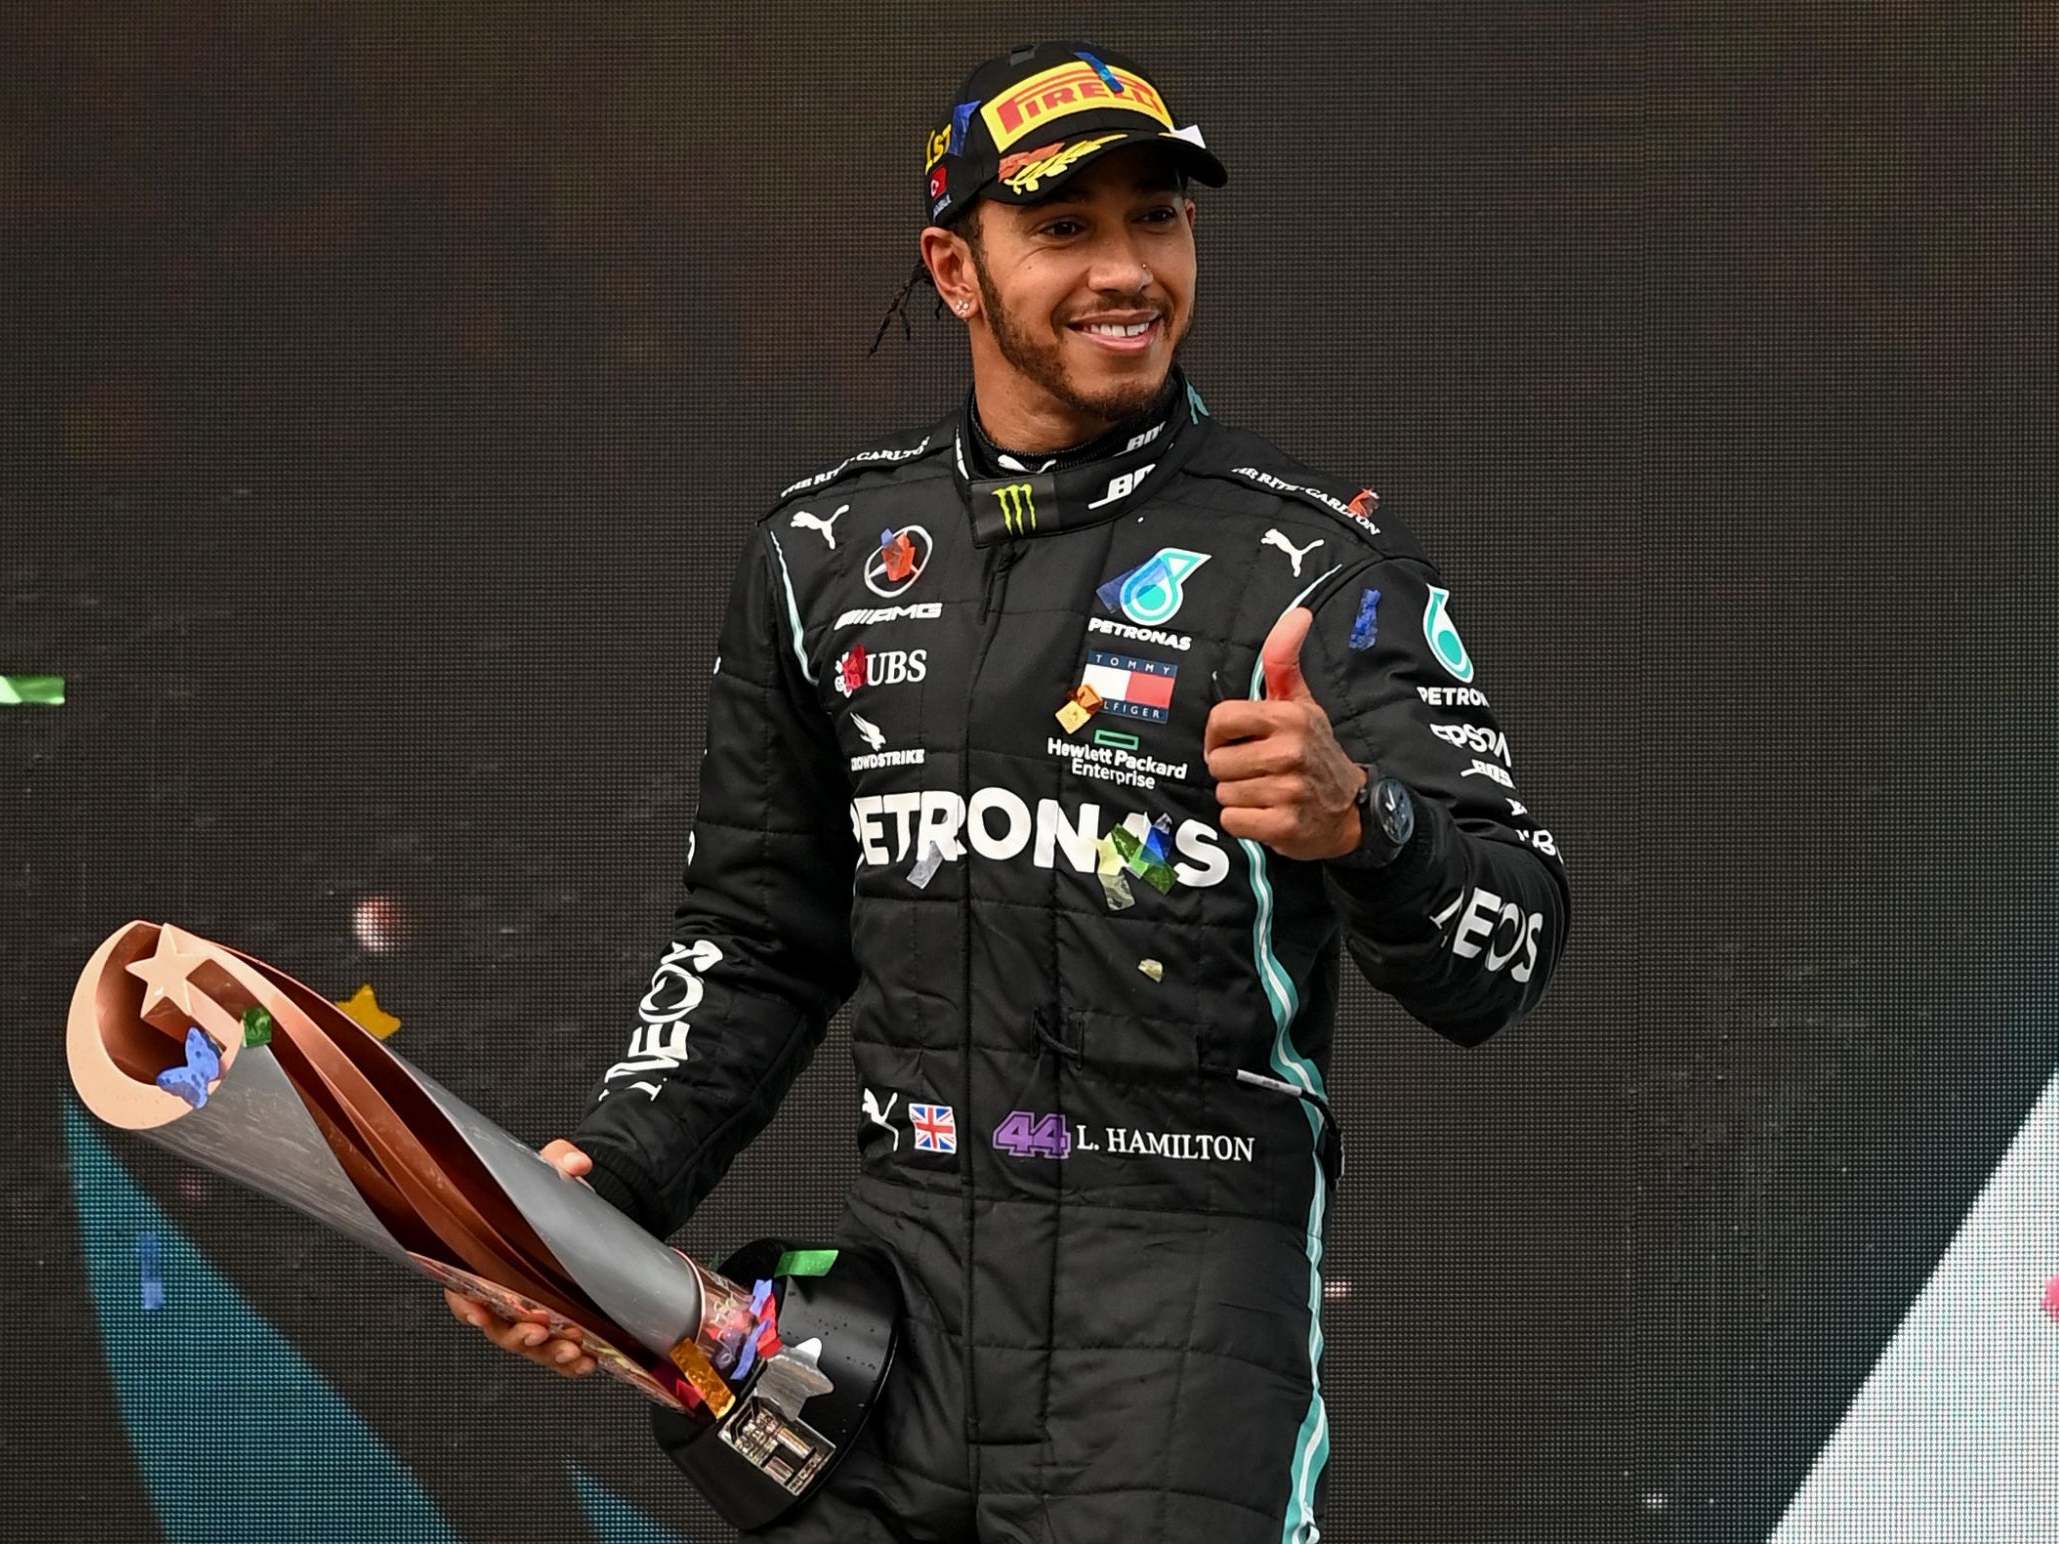 Lewis Hamilton has won six world titles since joining Mercedes